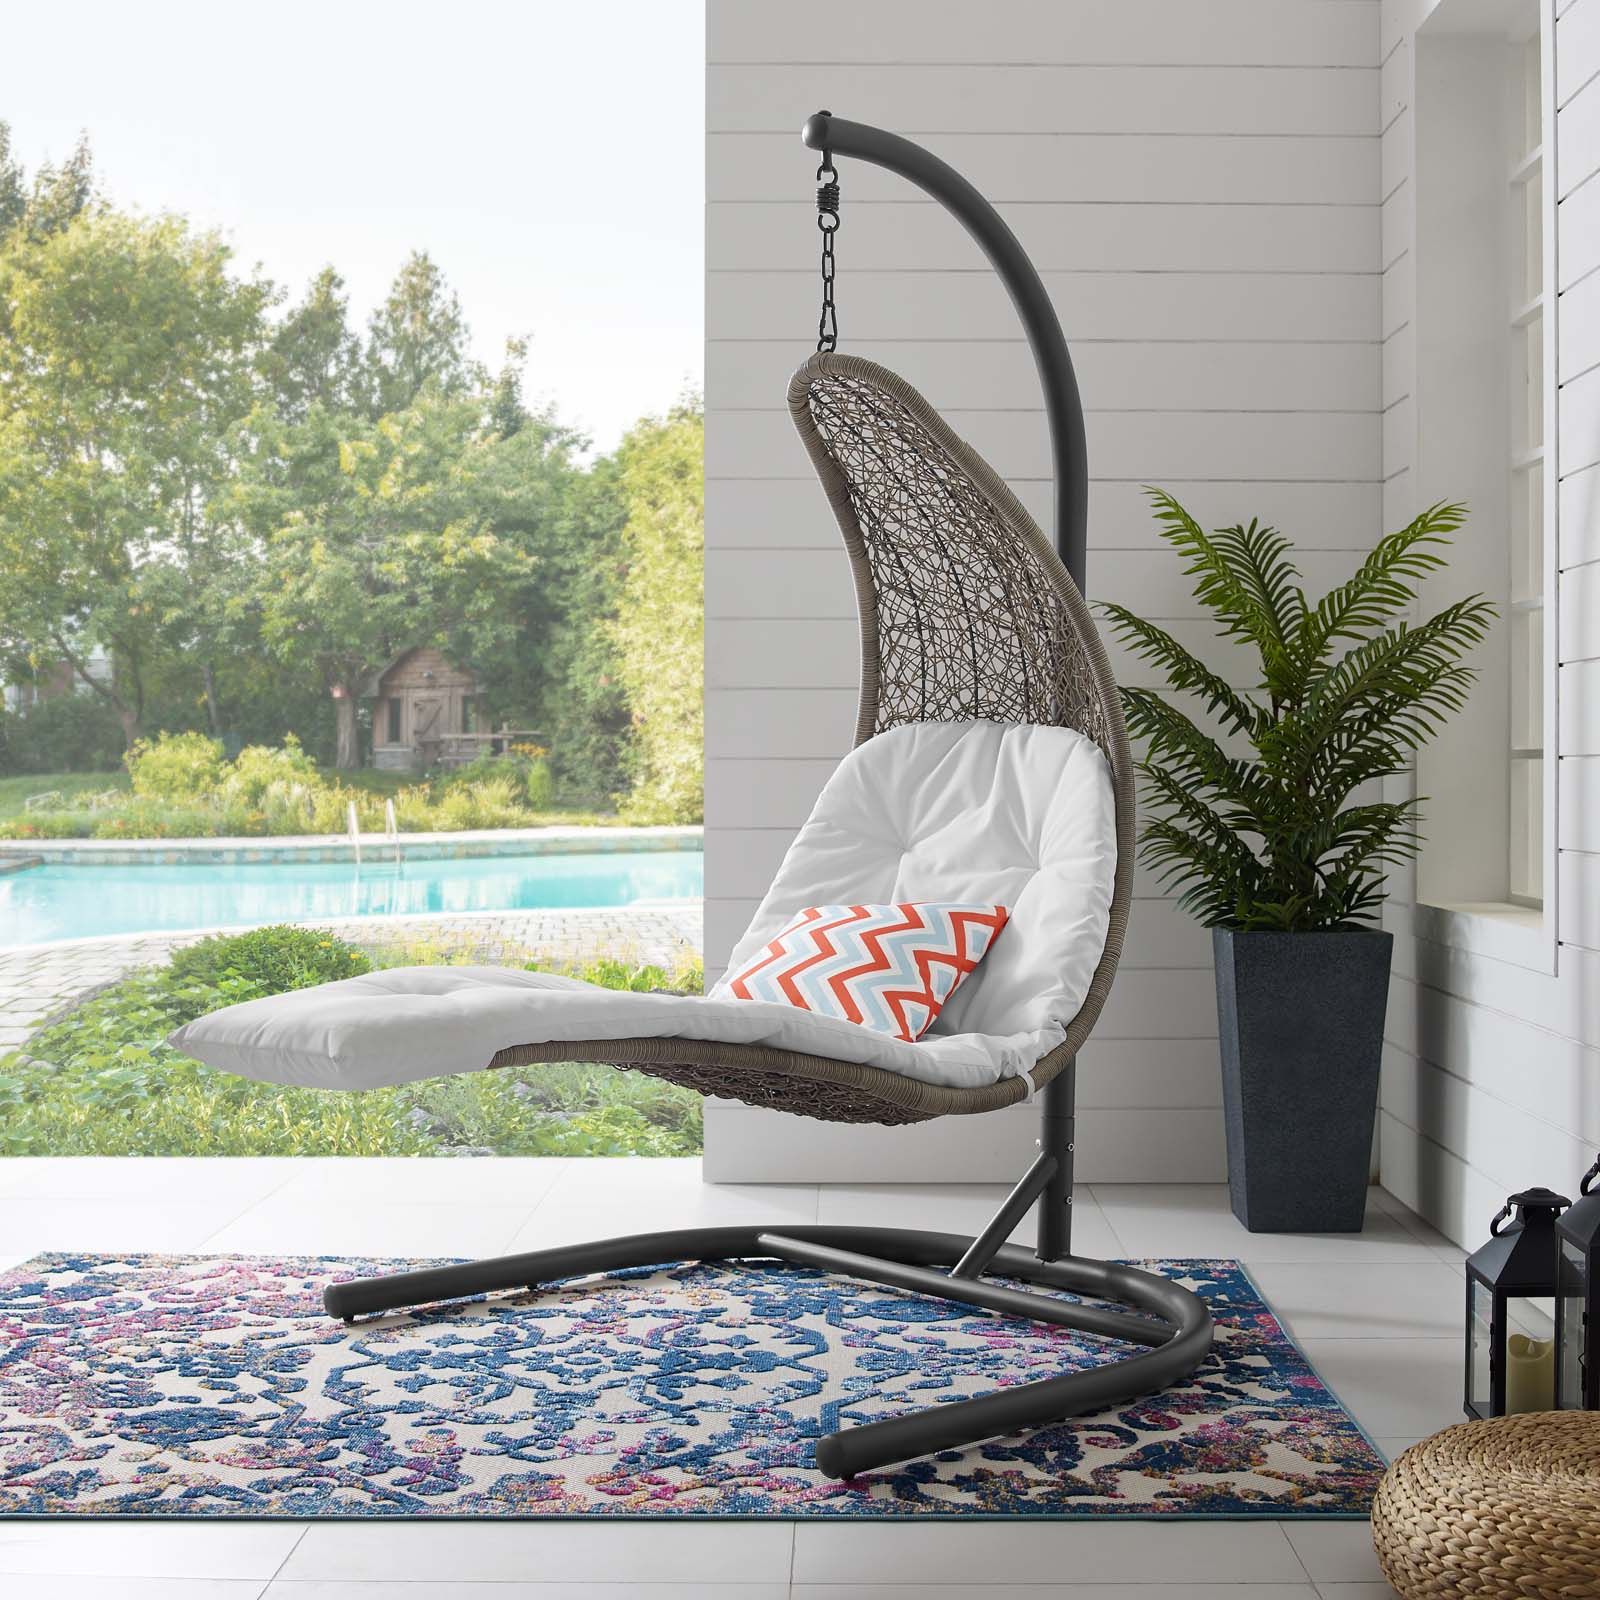 Modern Contemporary Urban Design Outdoor Patio Balcony Garden Furniture Swing Lounge Chair, Rattan Wicker, White Light Gray - image 2 of 5